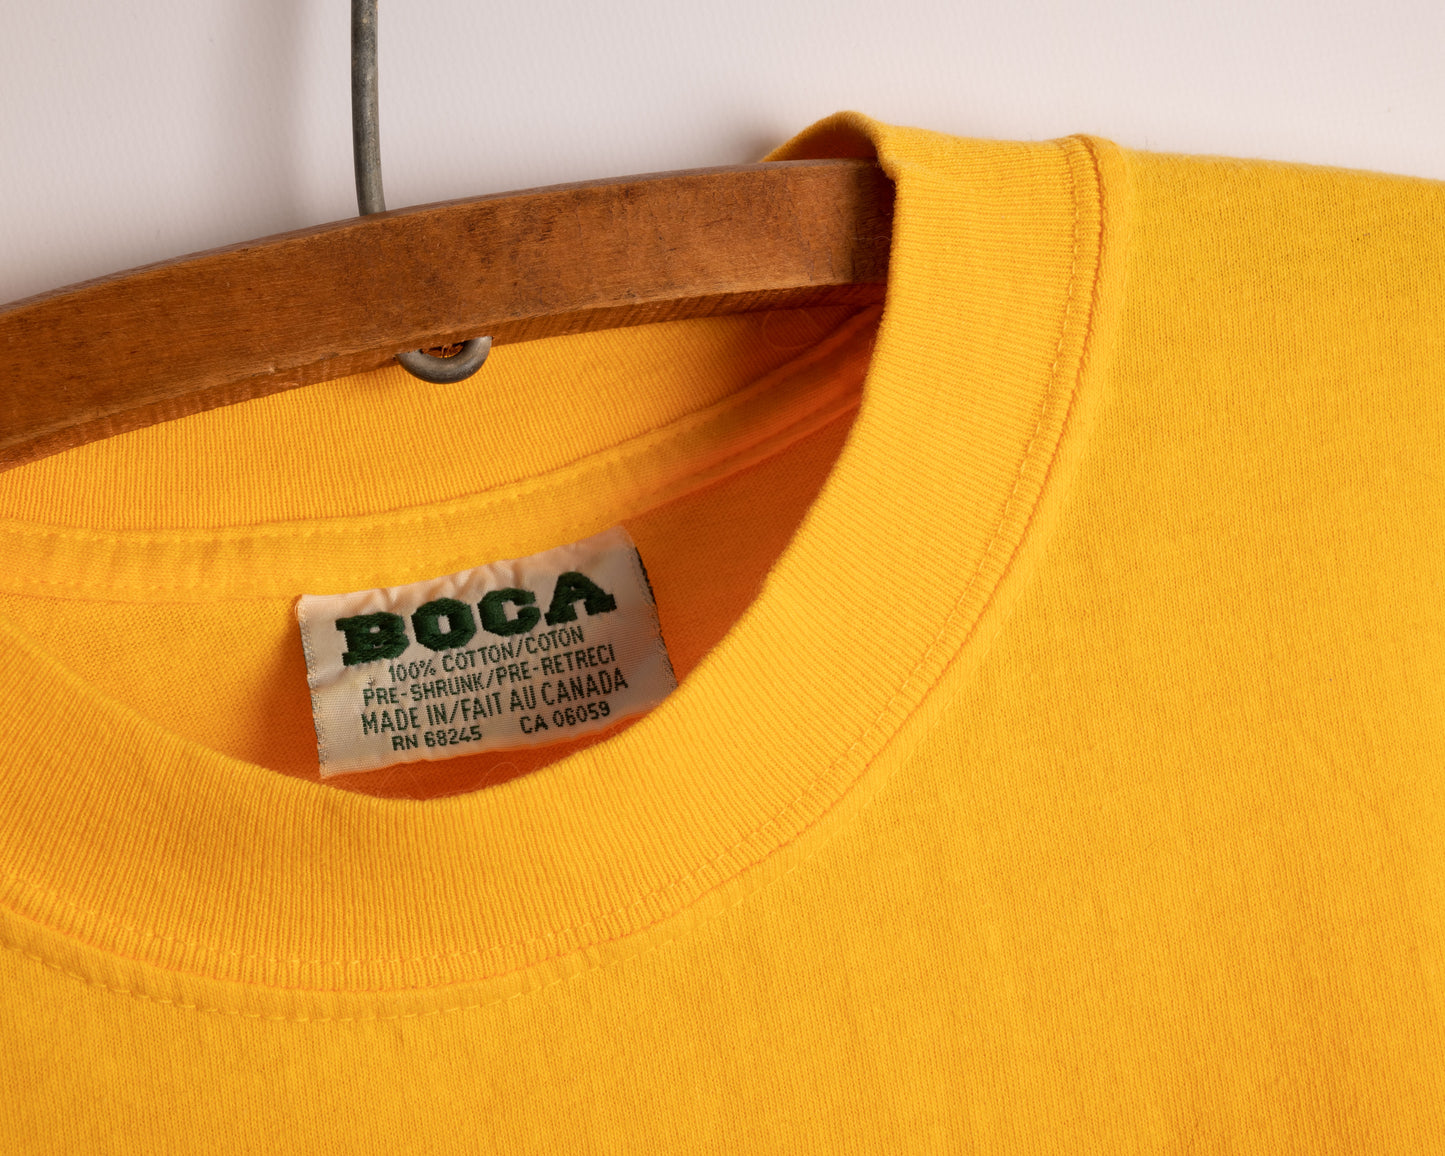 T-shirt jaune BOCA - fabriqué au Canada - grand